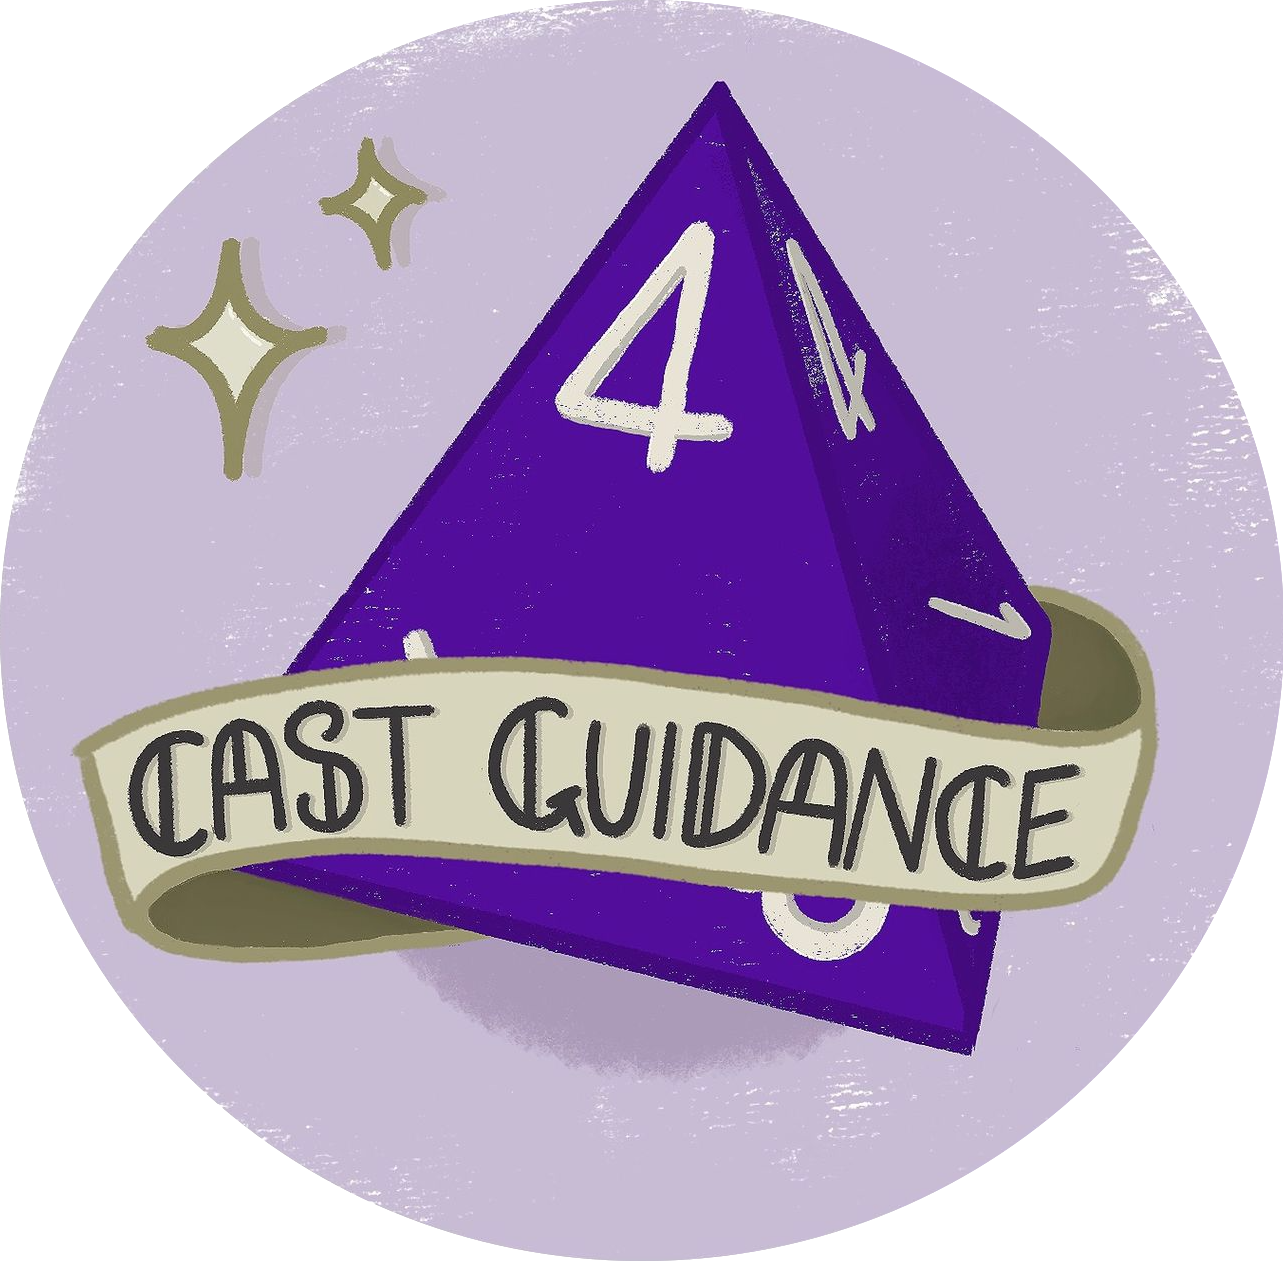 image of cast guidance logo